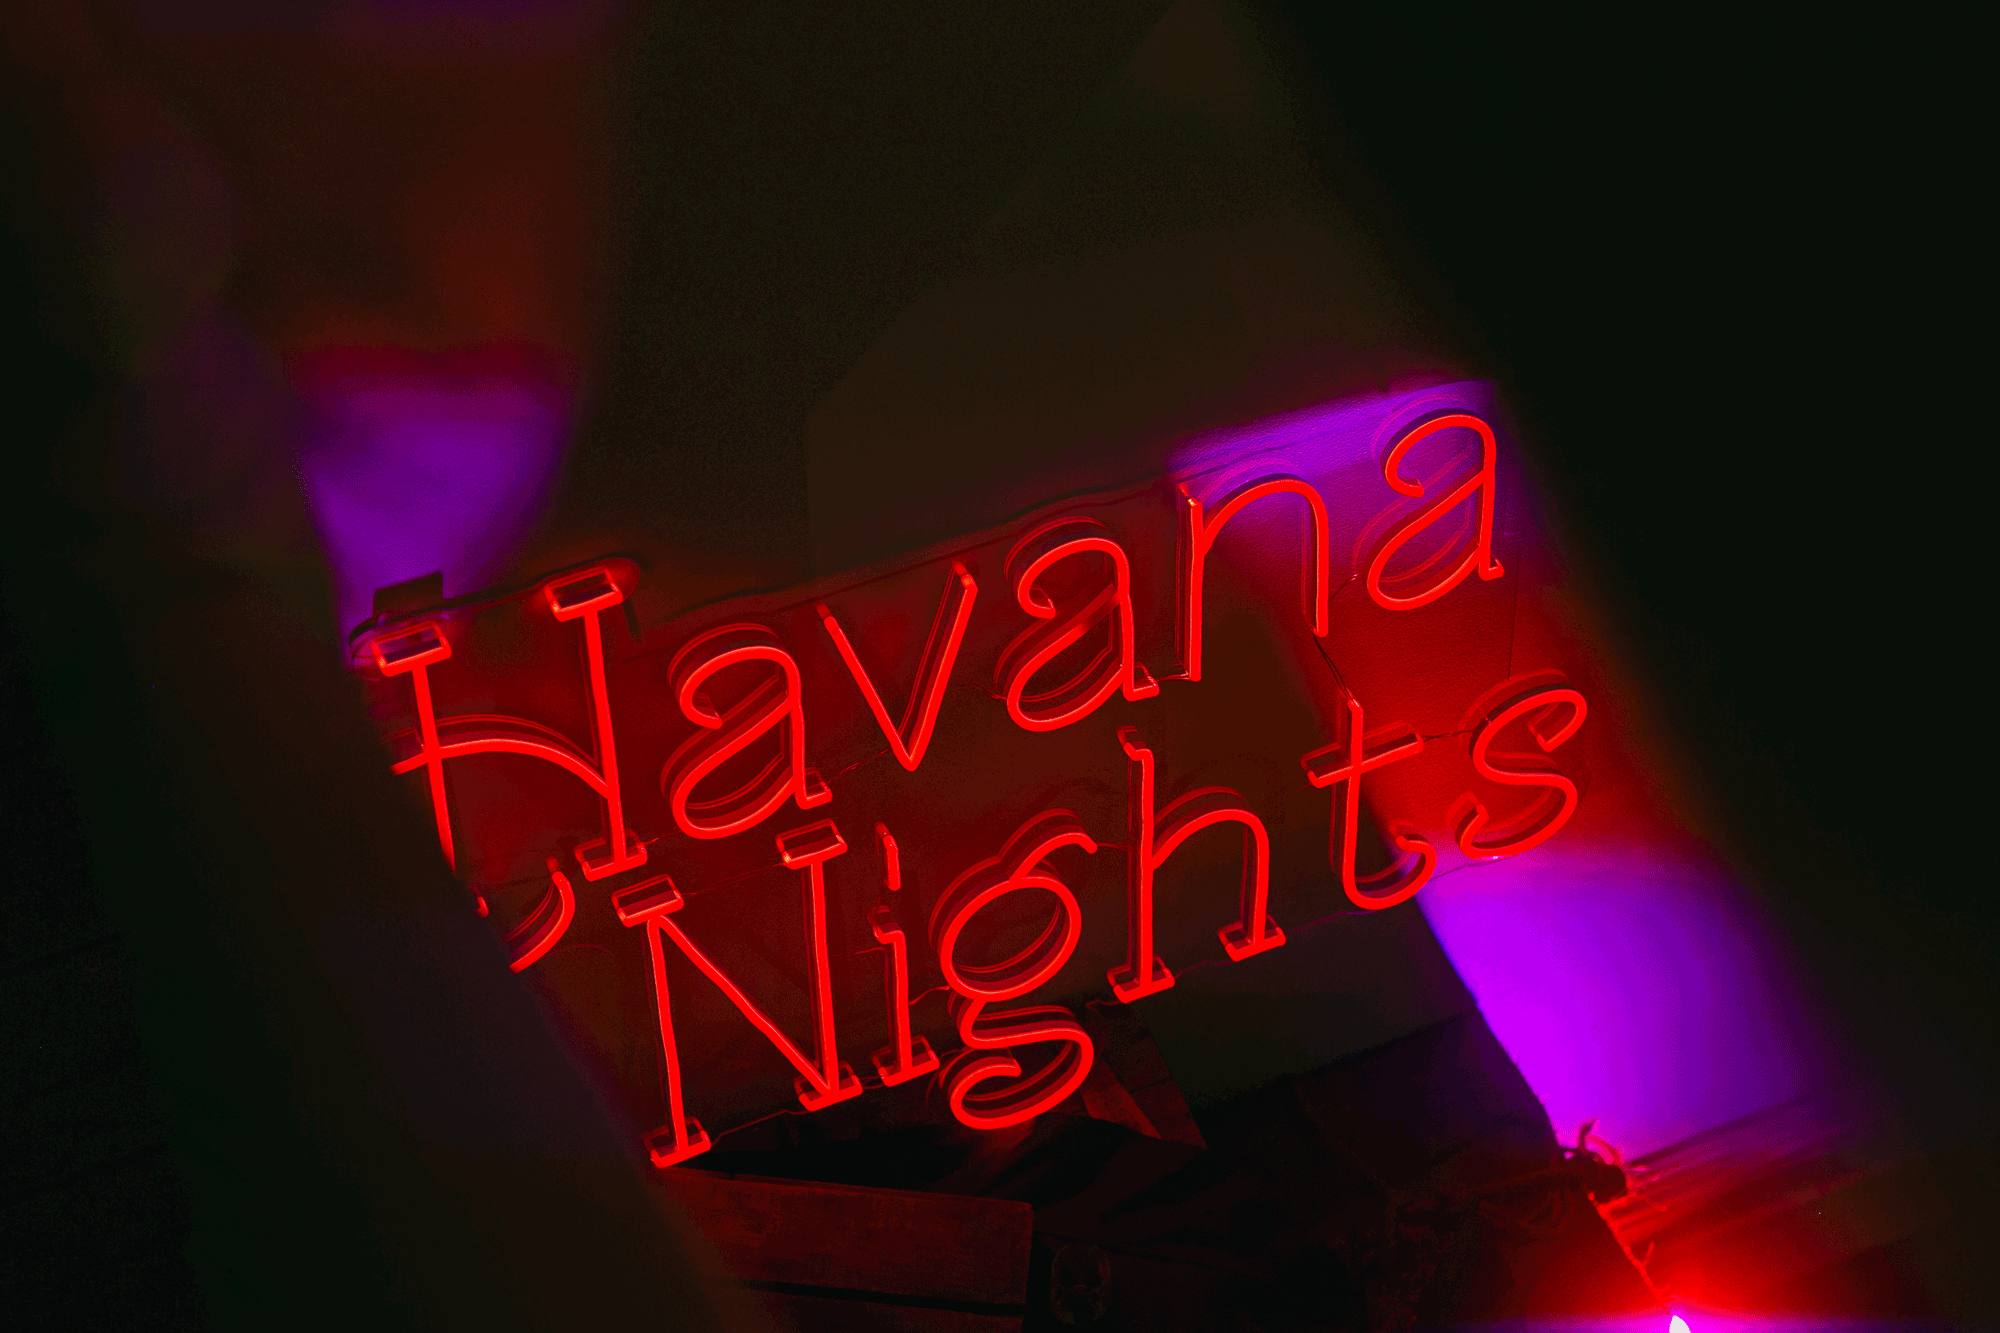 A 40+2 Havana Nights Birthday